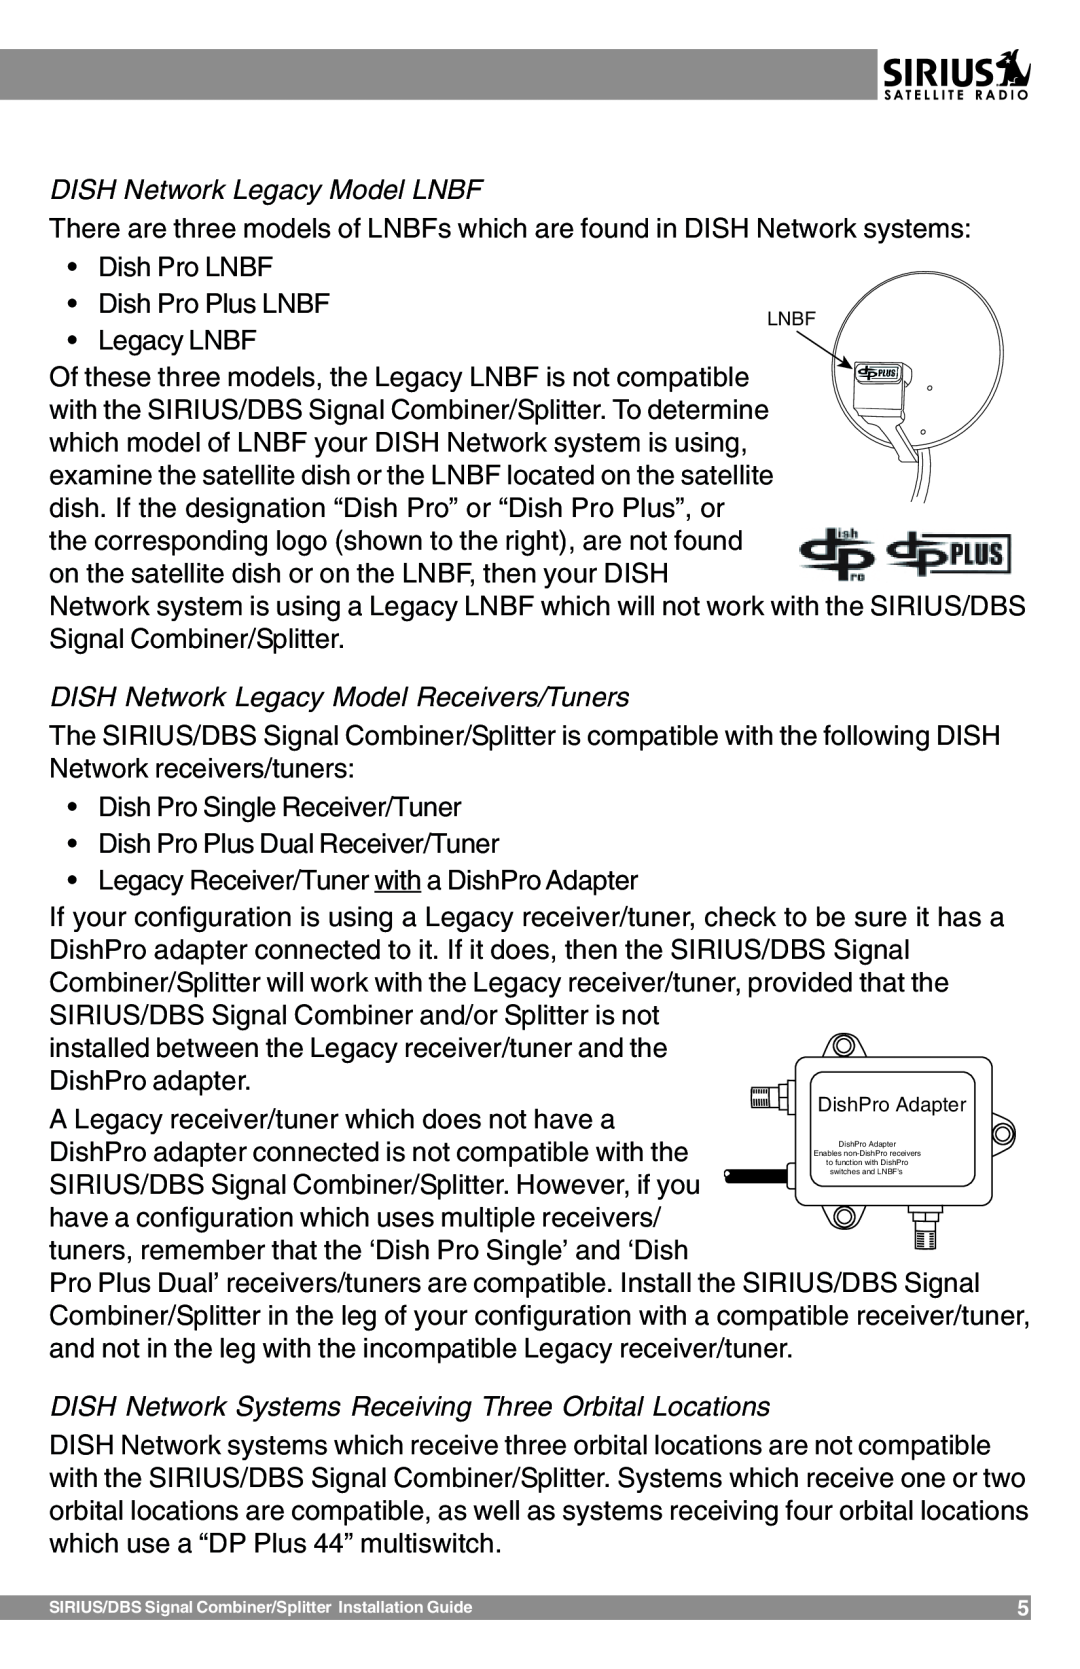 Sirius Satellite Radio SR-100C manual DISH Network Legacy Model LNBF, DISH Network Legacy Model Receivers/Tuners 